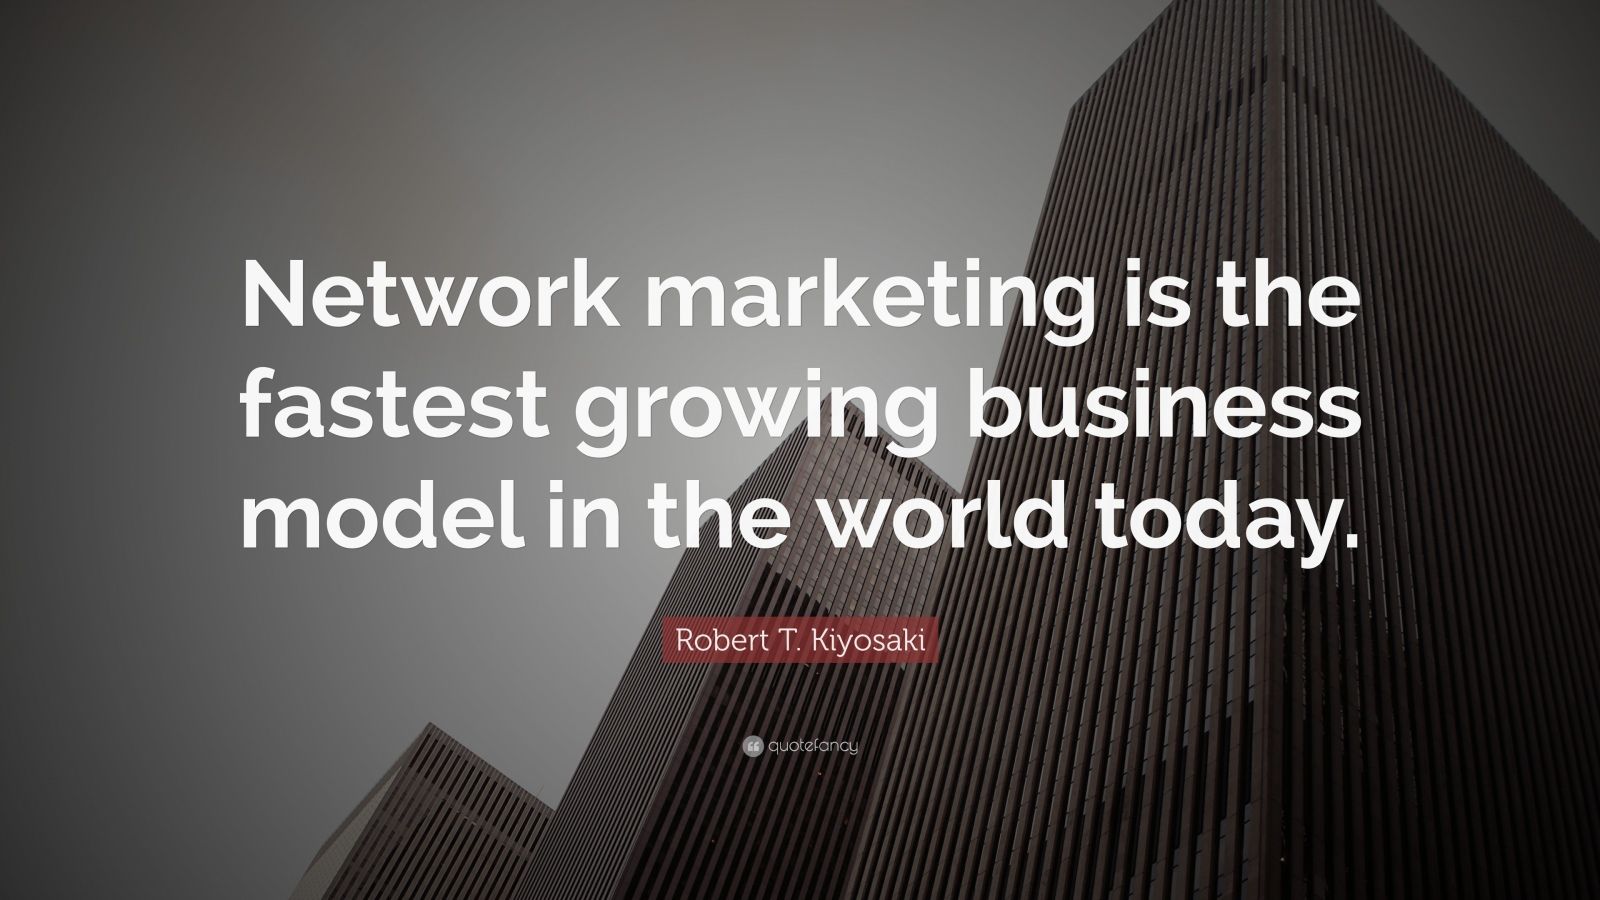 206660 Robert T Kiyosaki Quote Network marketing is the fastest growing